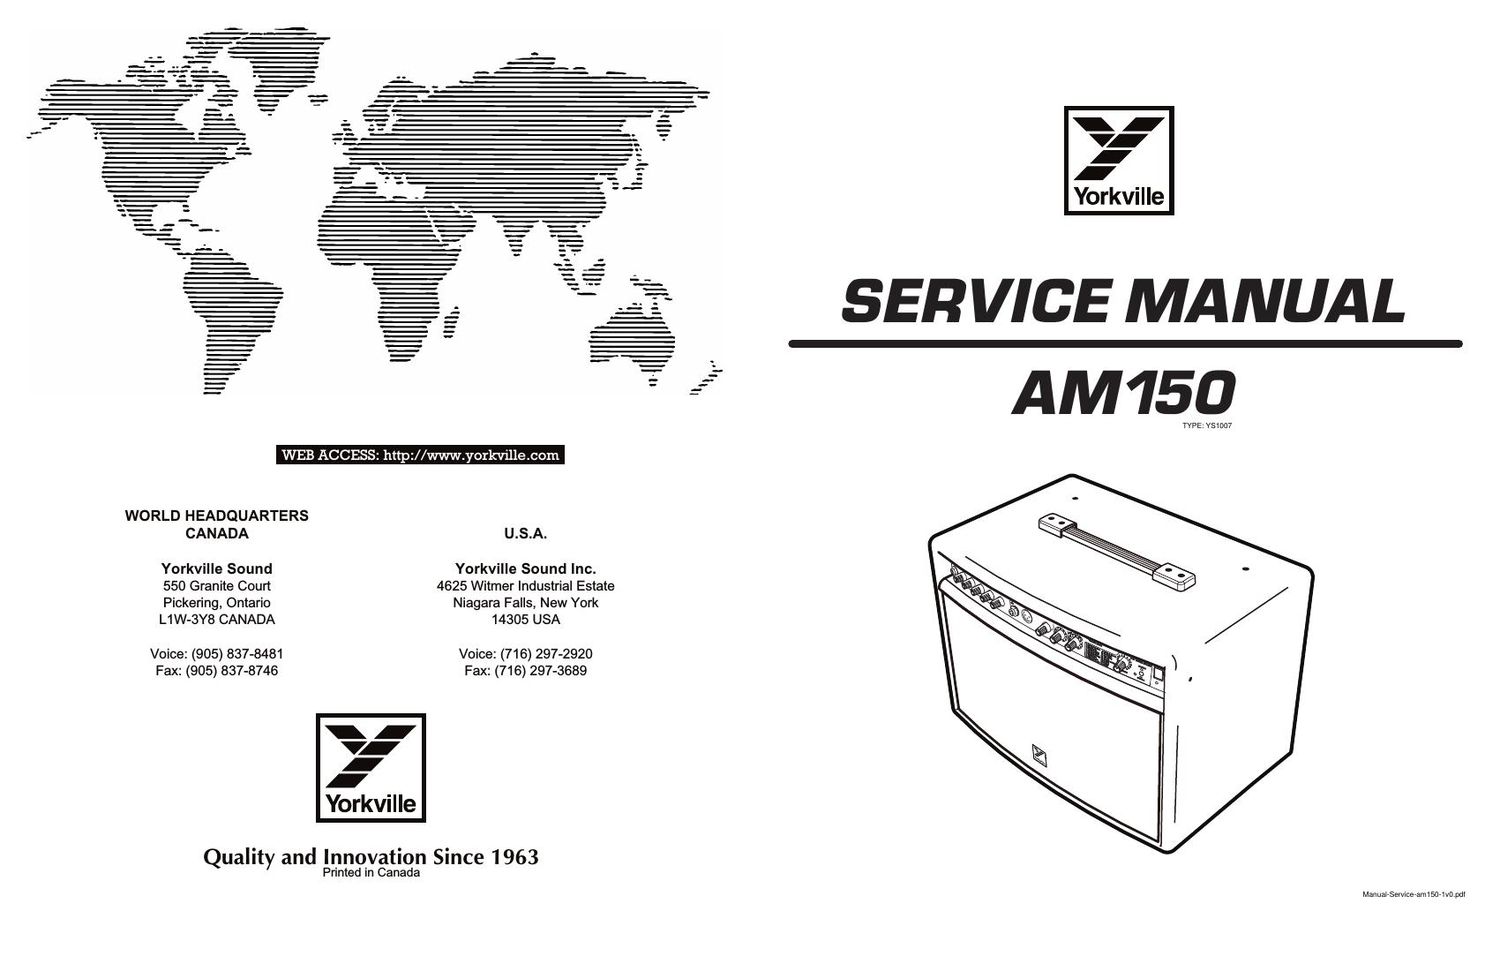 Yorkville AM150 Service Manual